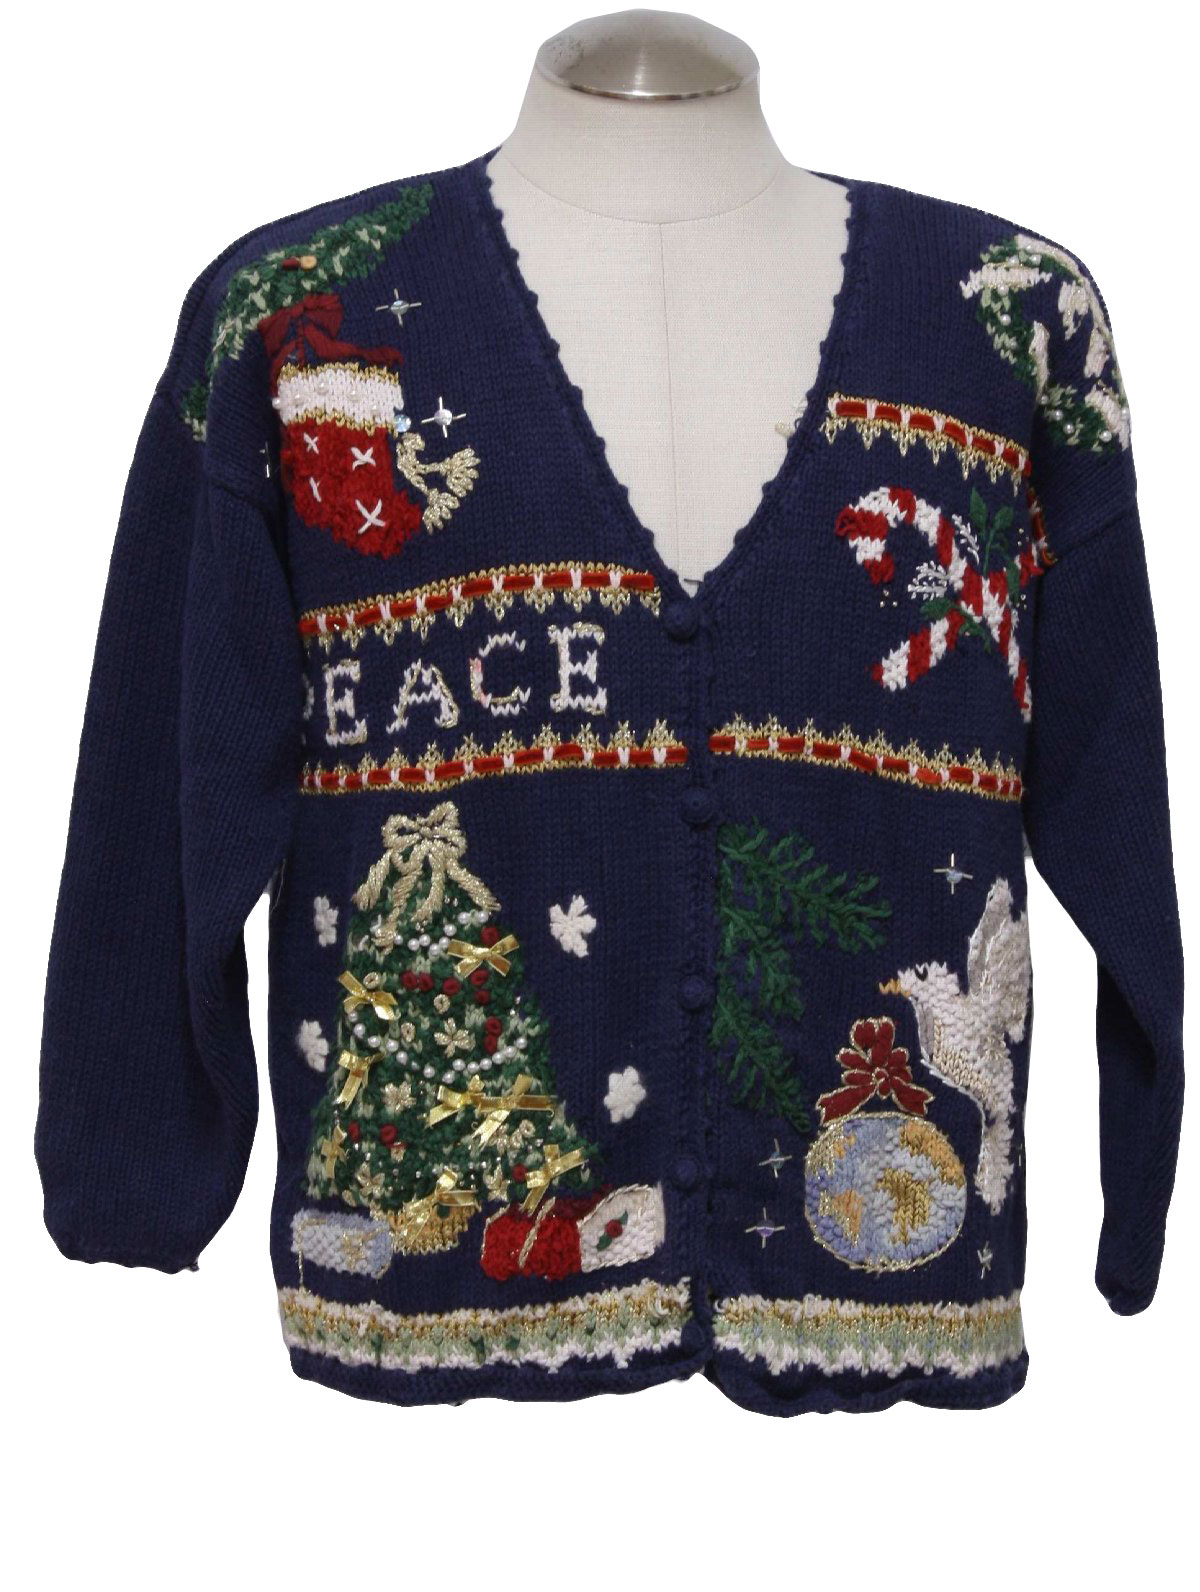 Ugly Christmas Cardigan Sweater: -Tiara International- Unisex navy blue